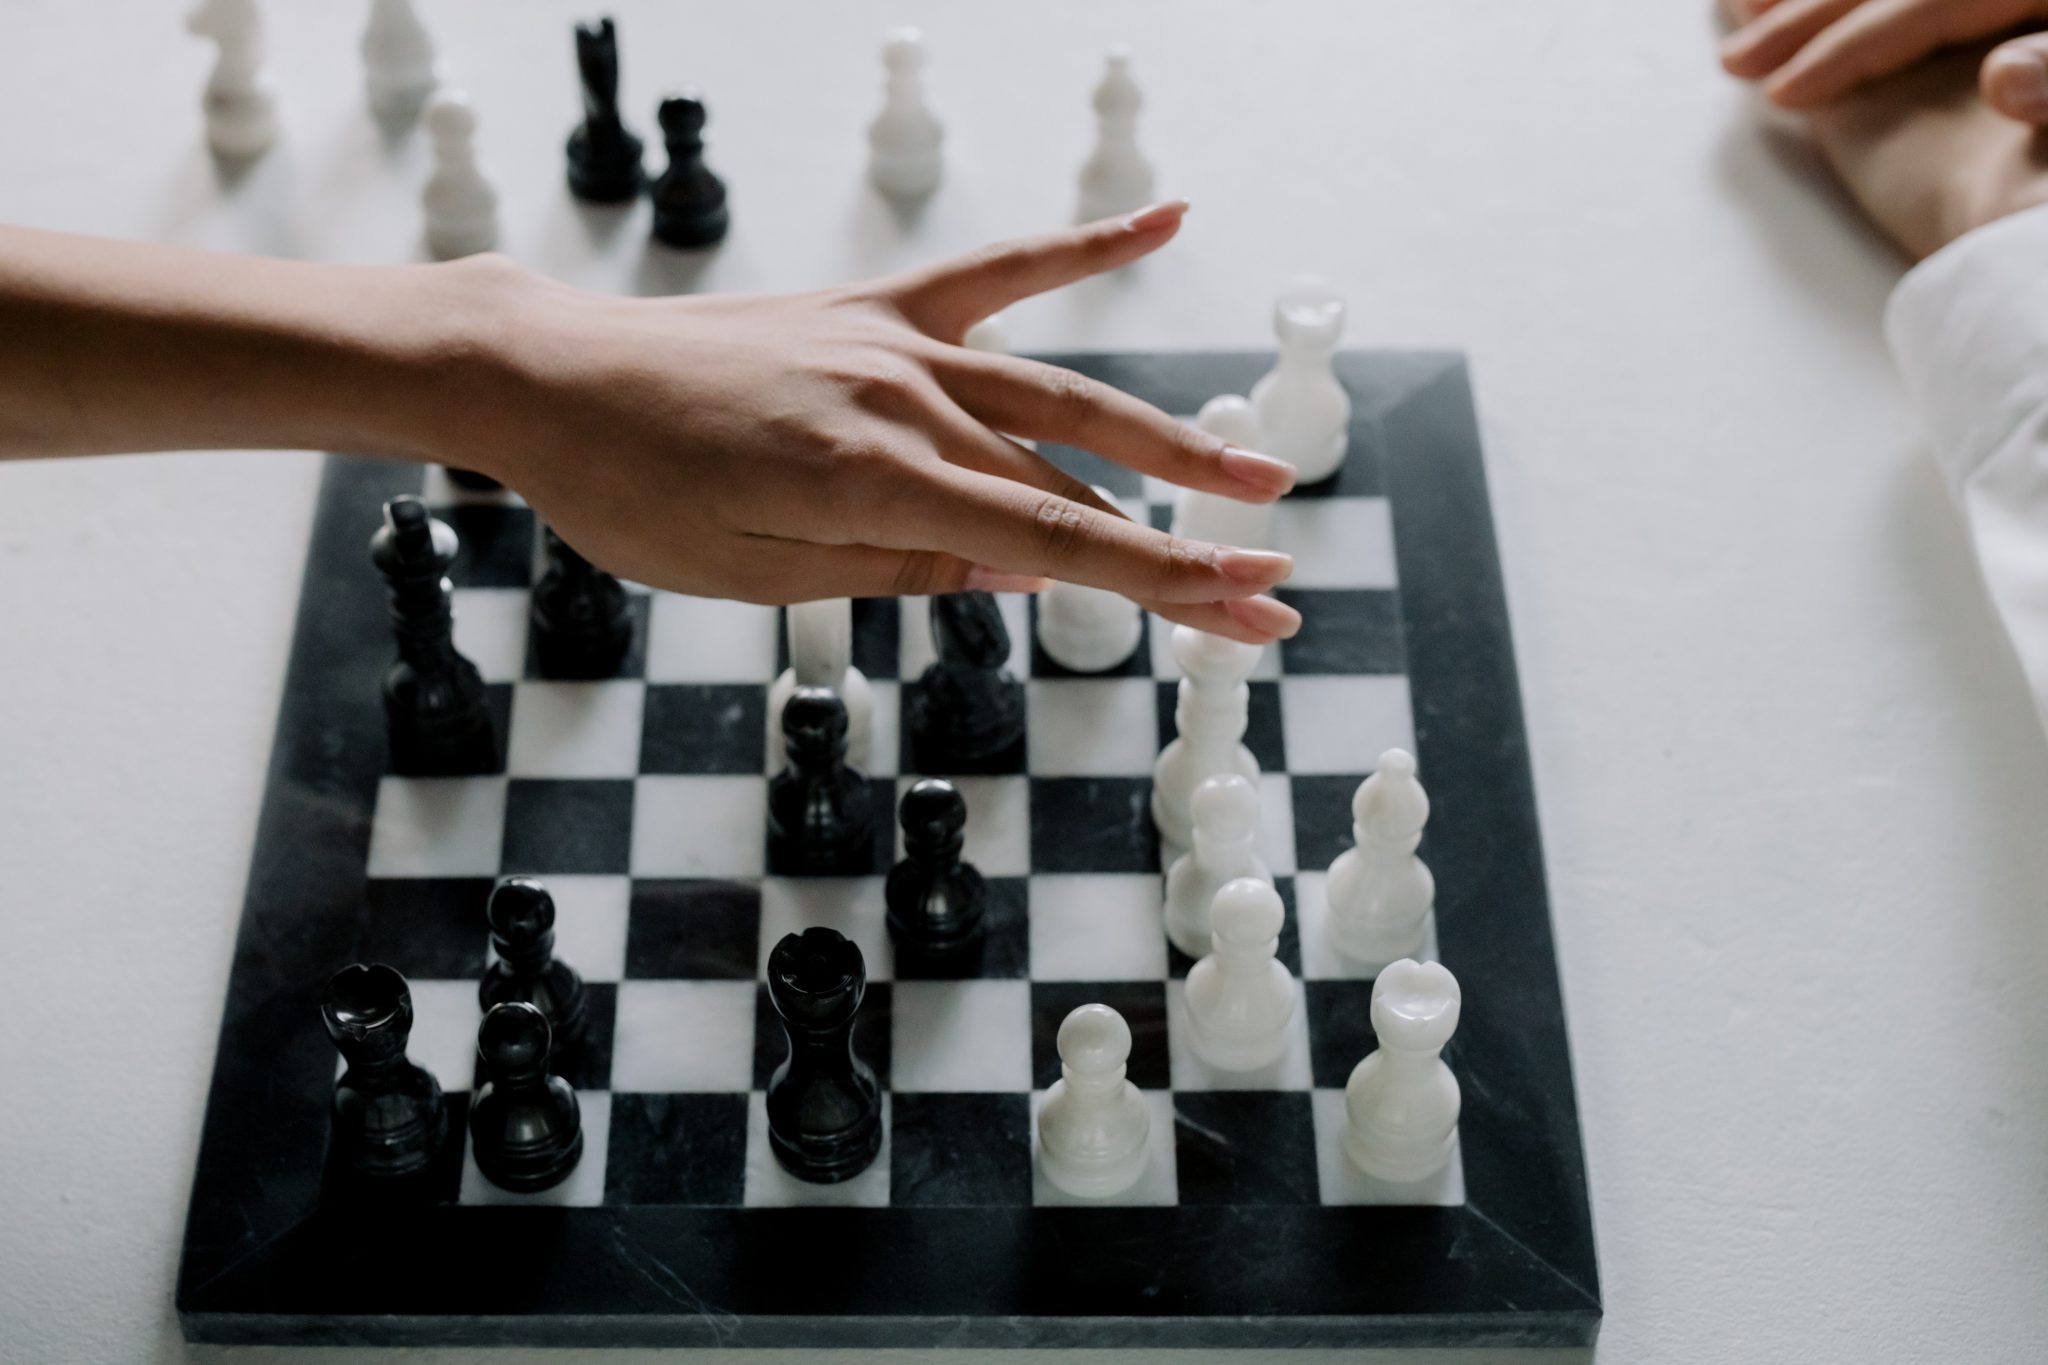 Iniciativa no Recife ensina xadrez às mulheres gratuitamente